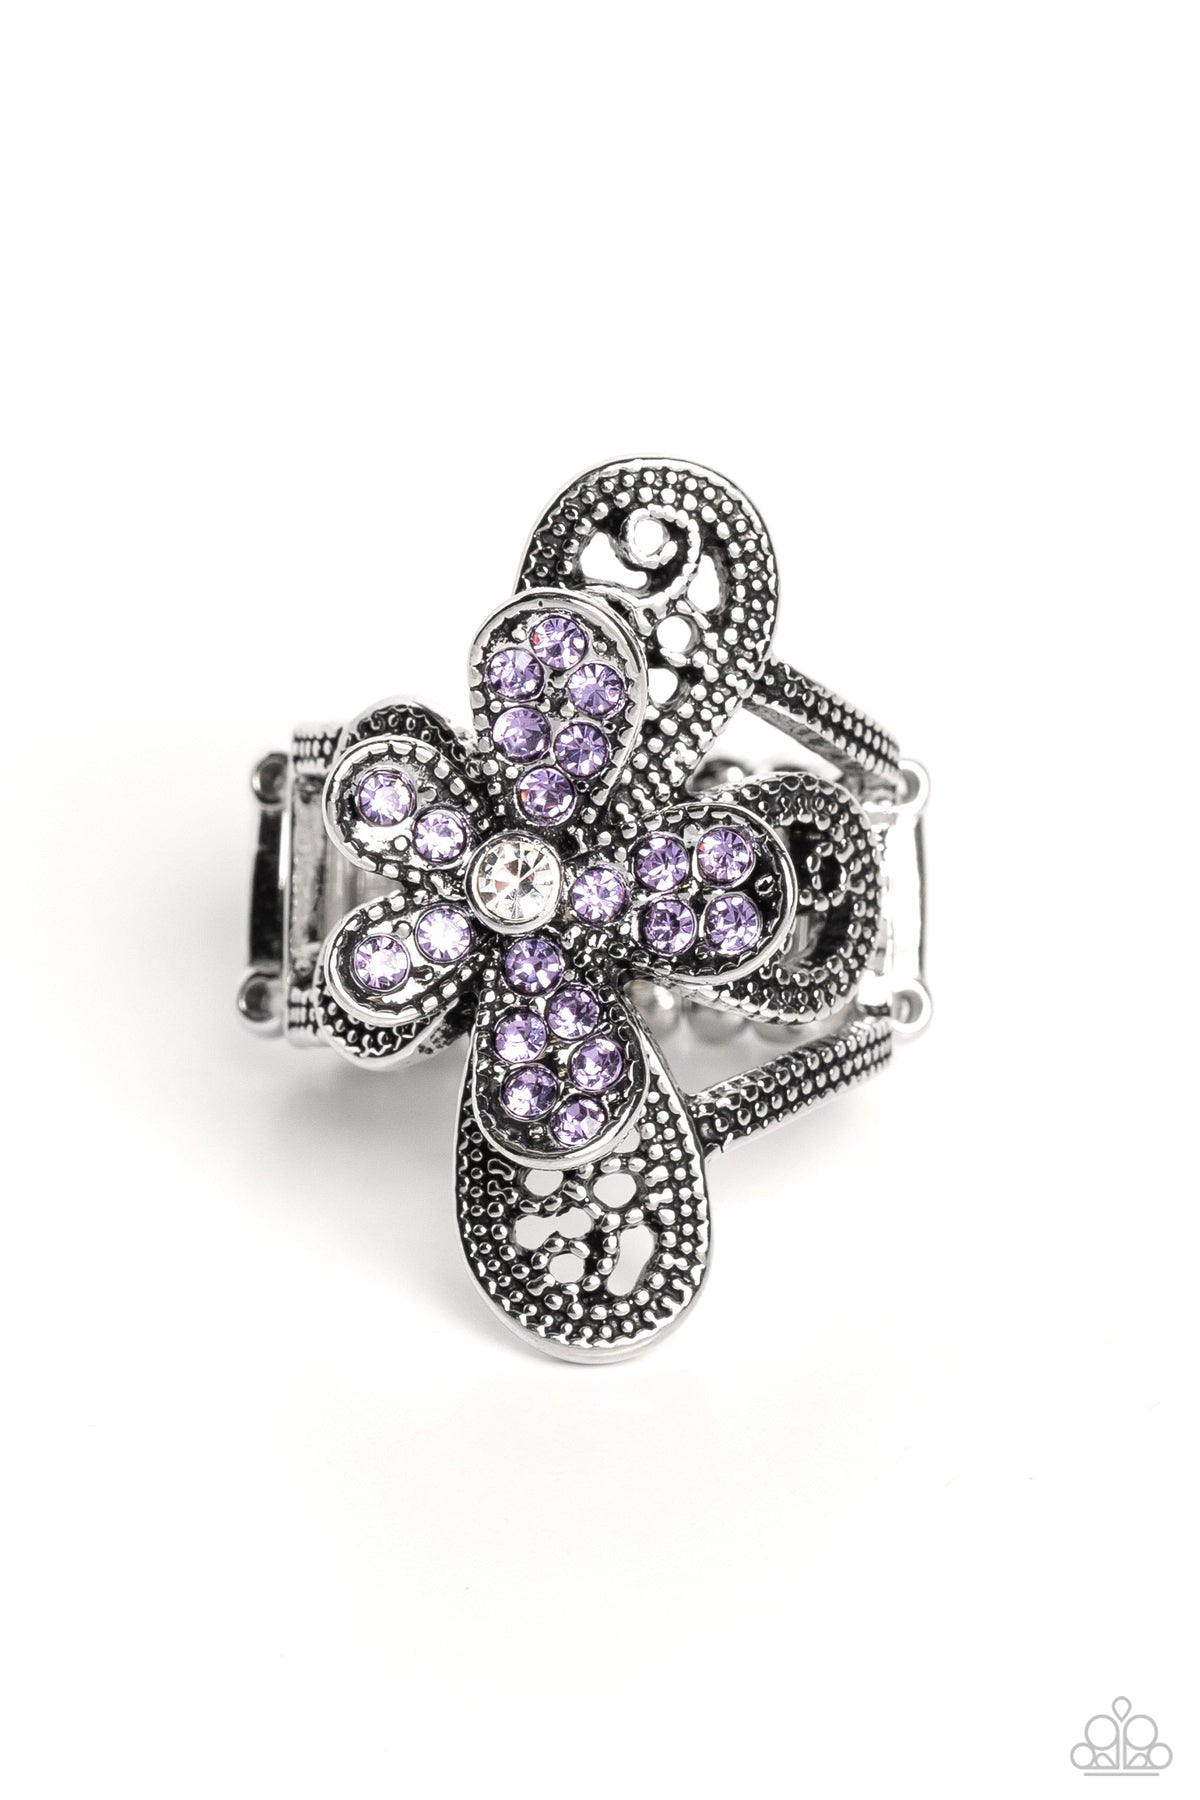 Garden Escapade Purple Flower Ring - Paparazzi Accessories- lightbox - CarasShop.com - $5 Jewelry by Cara Jewels